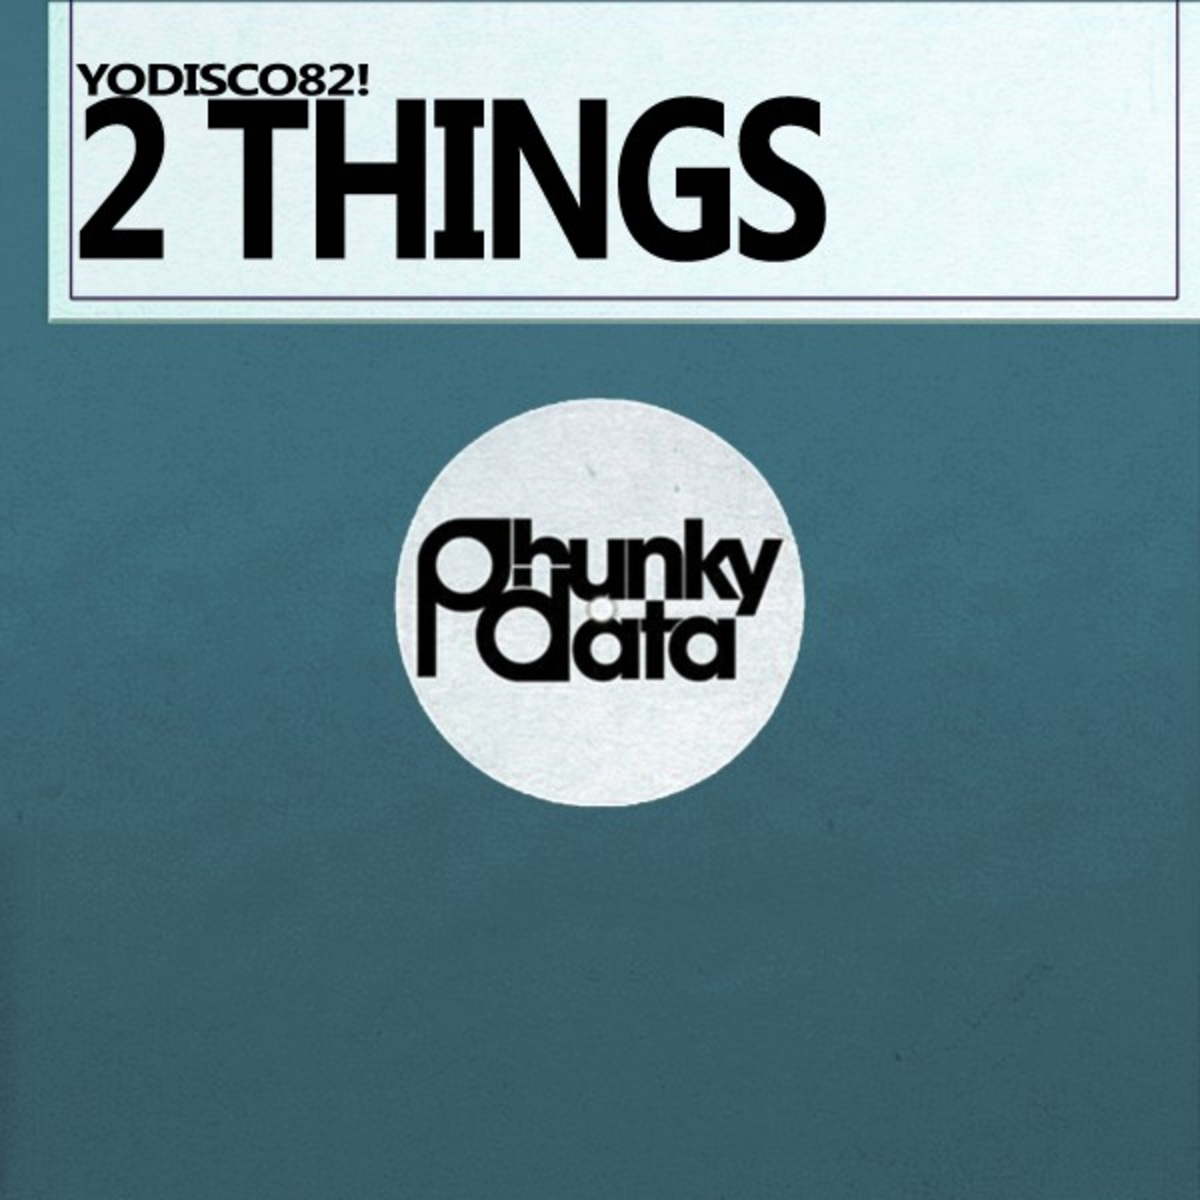 YoDisco82! - 2 Things / Phunky Data